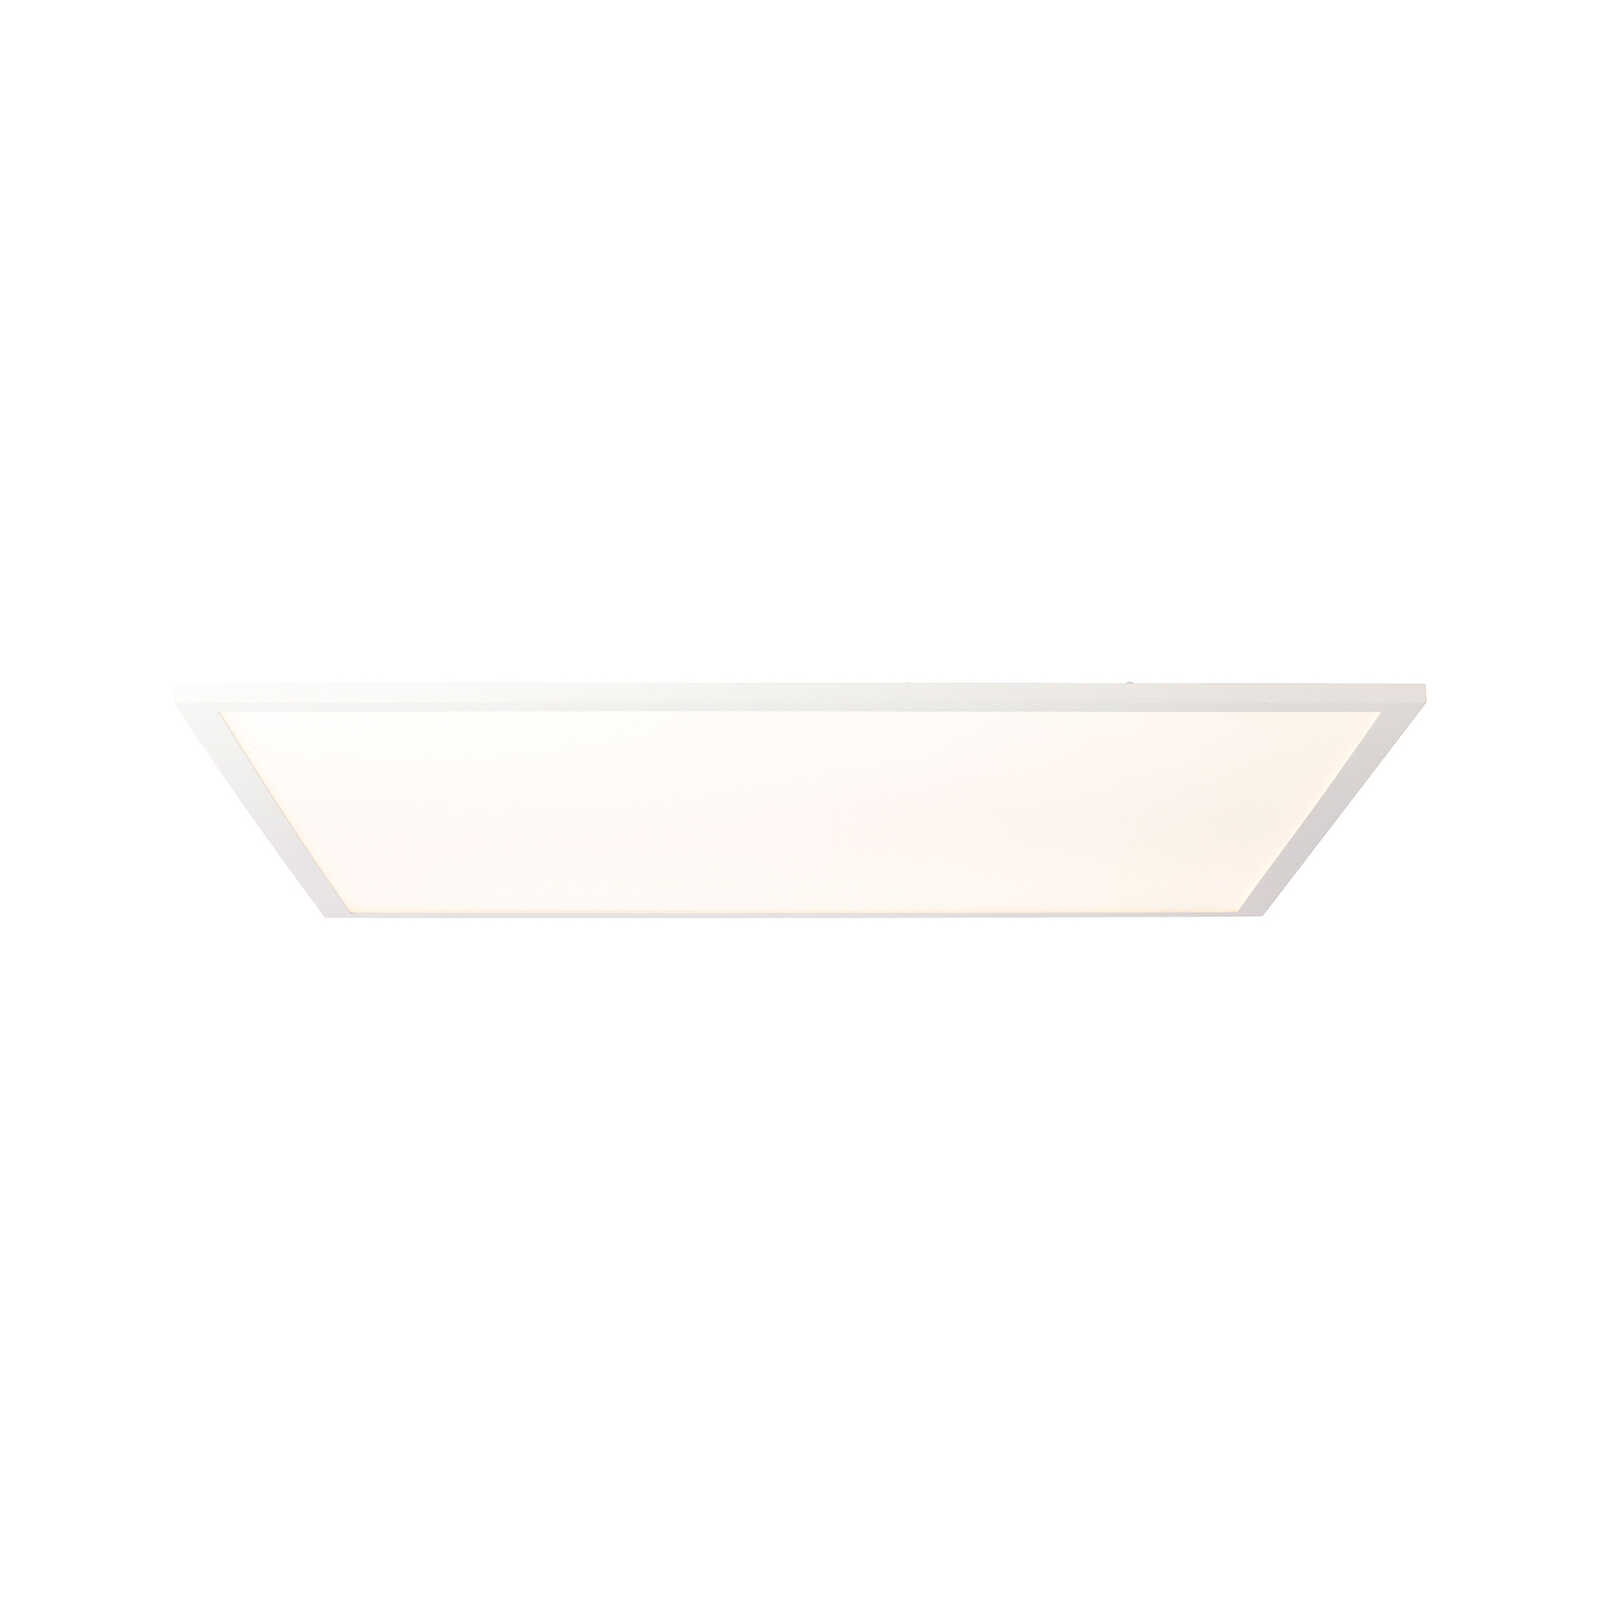 Plastic ceiling light - Constantin 10 - White
